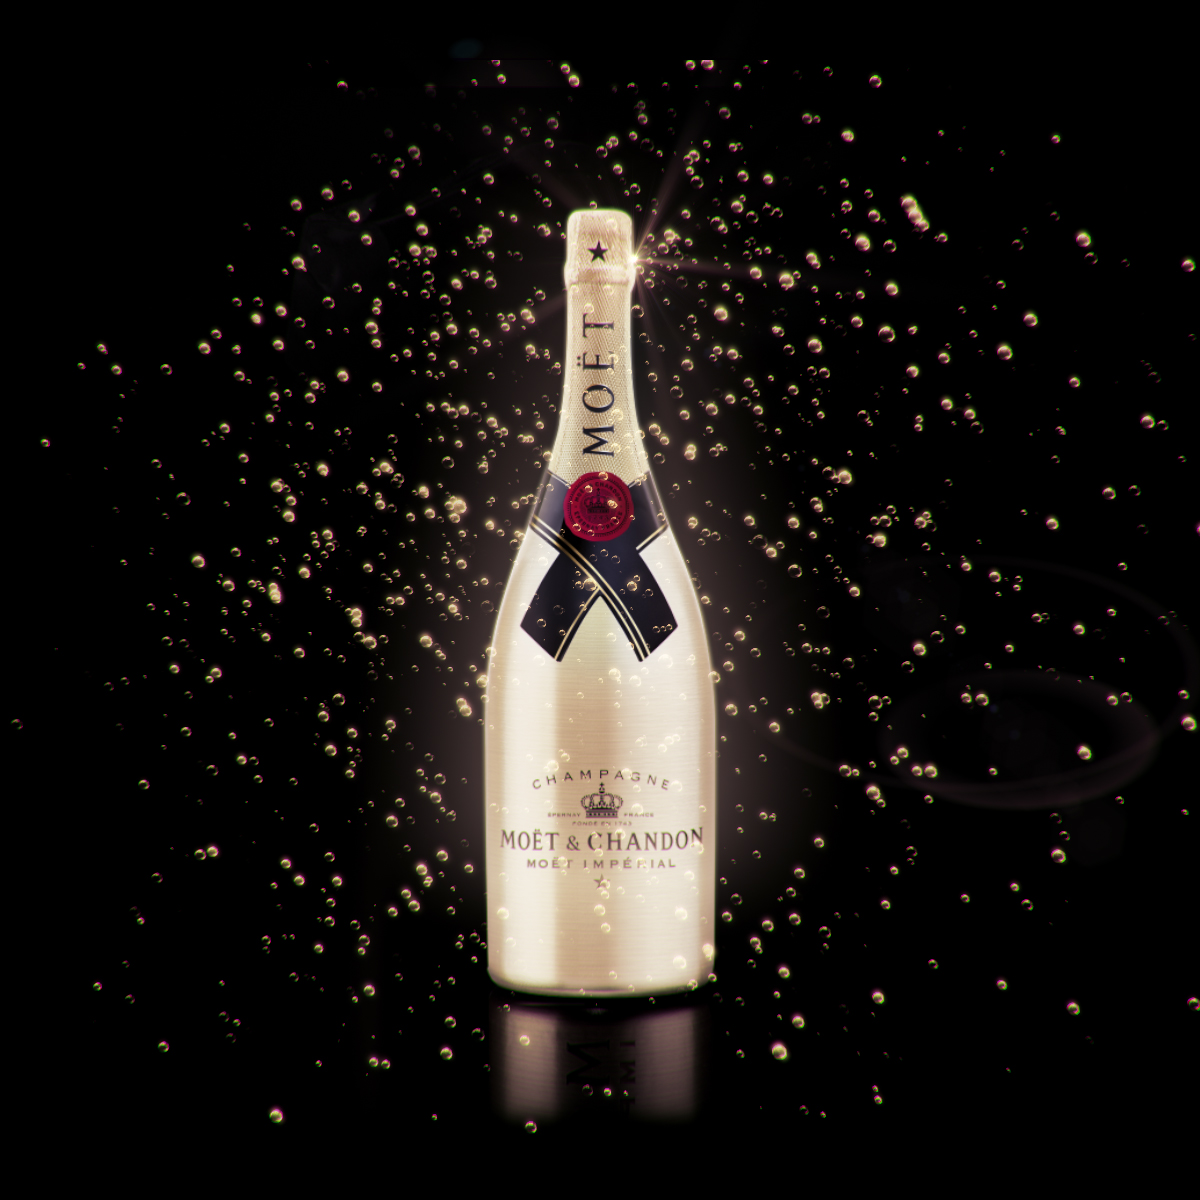 3D champagne bottle with bubbles artwork